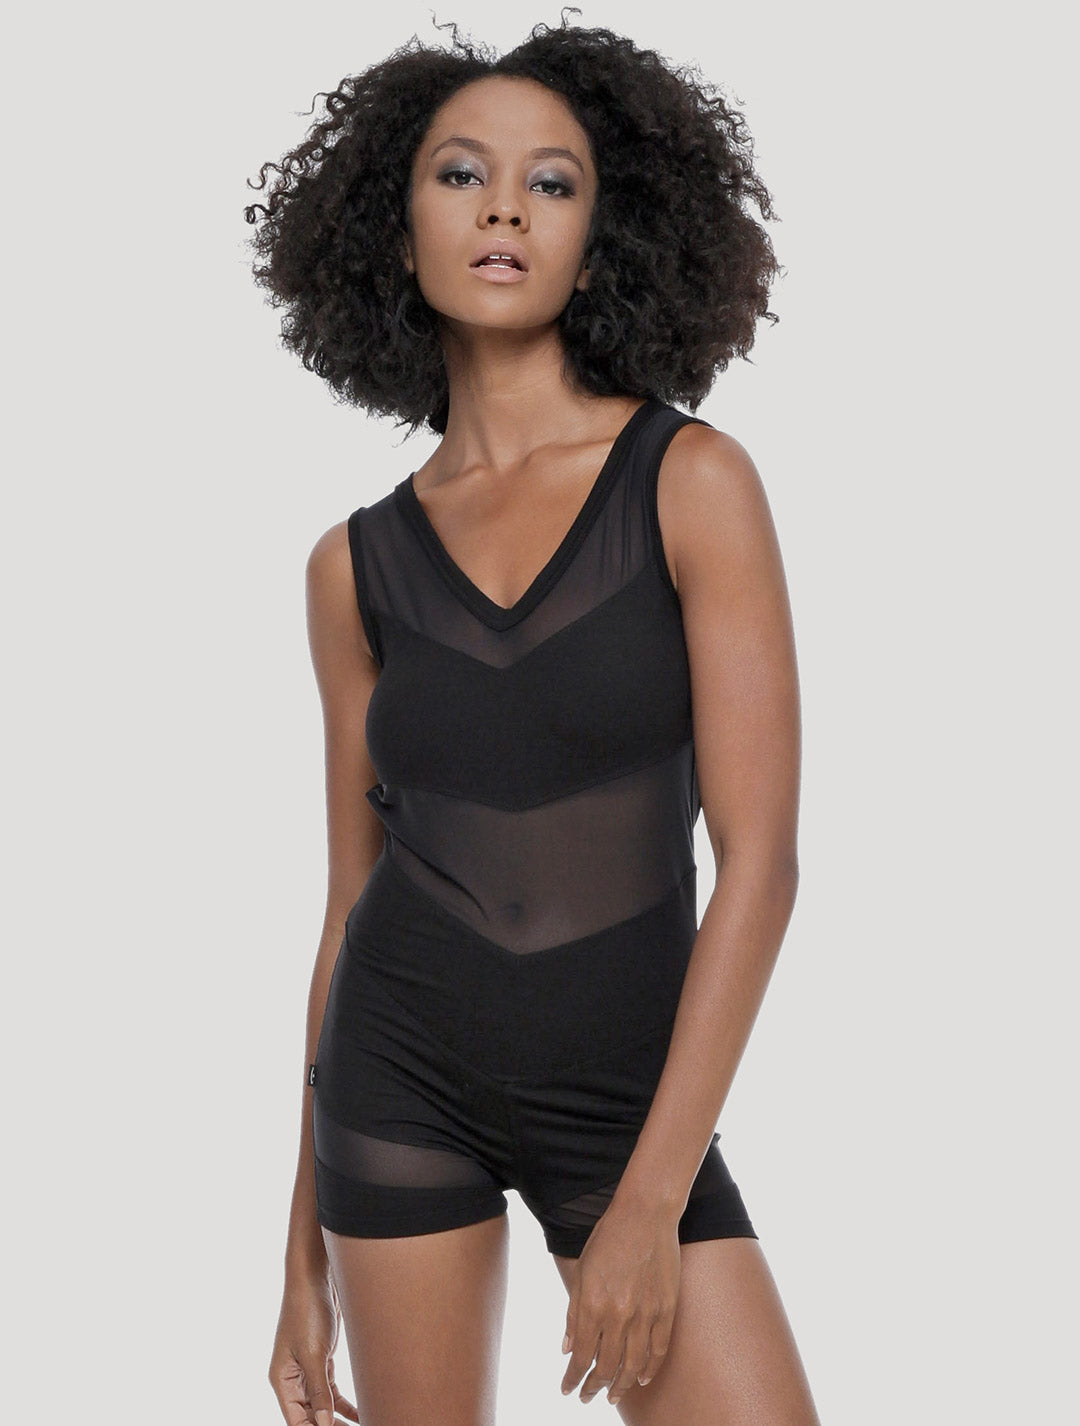 Sheer Mesh Bodysuit - Buy Fashion Wholesale in The UK